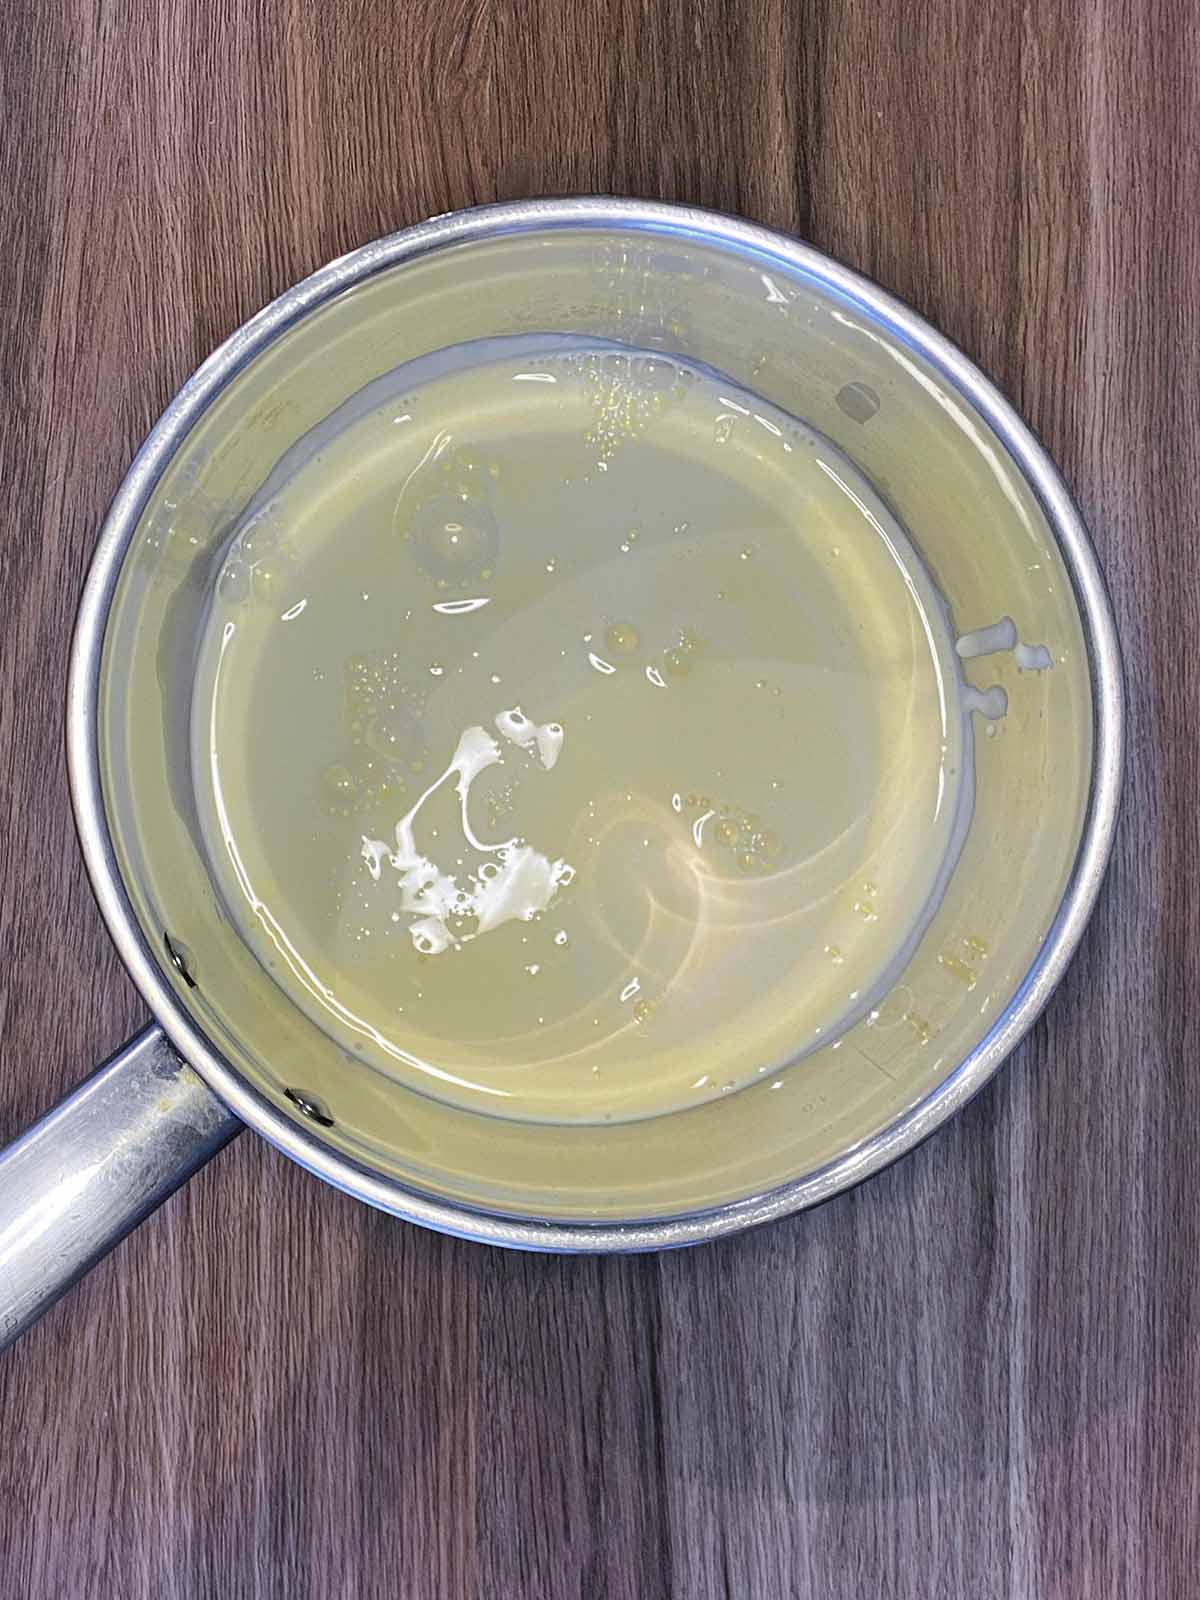 Milk and cream in a saucepan.